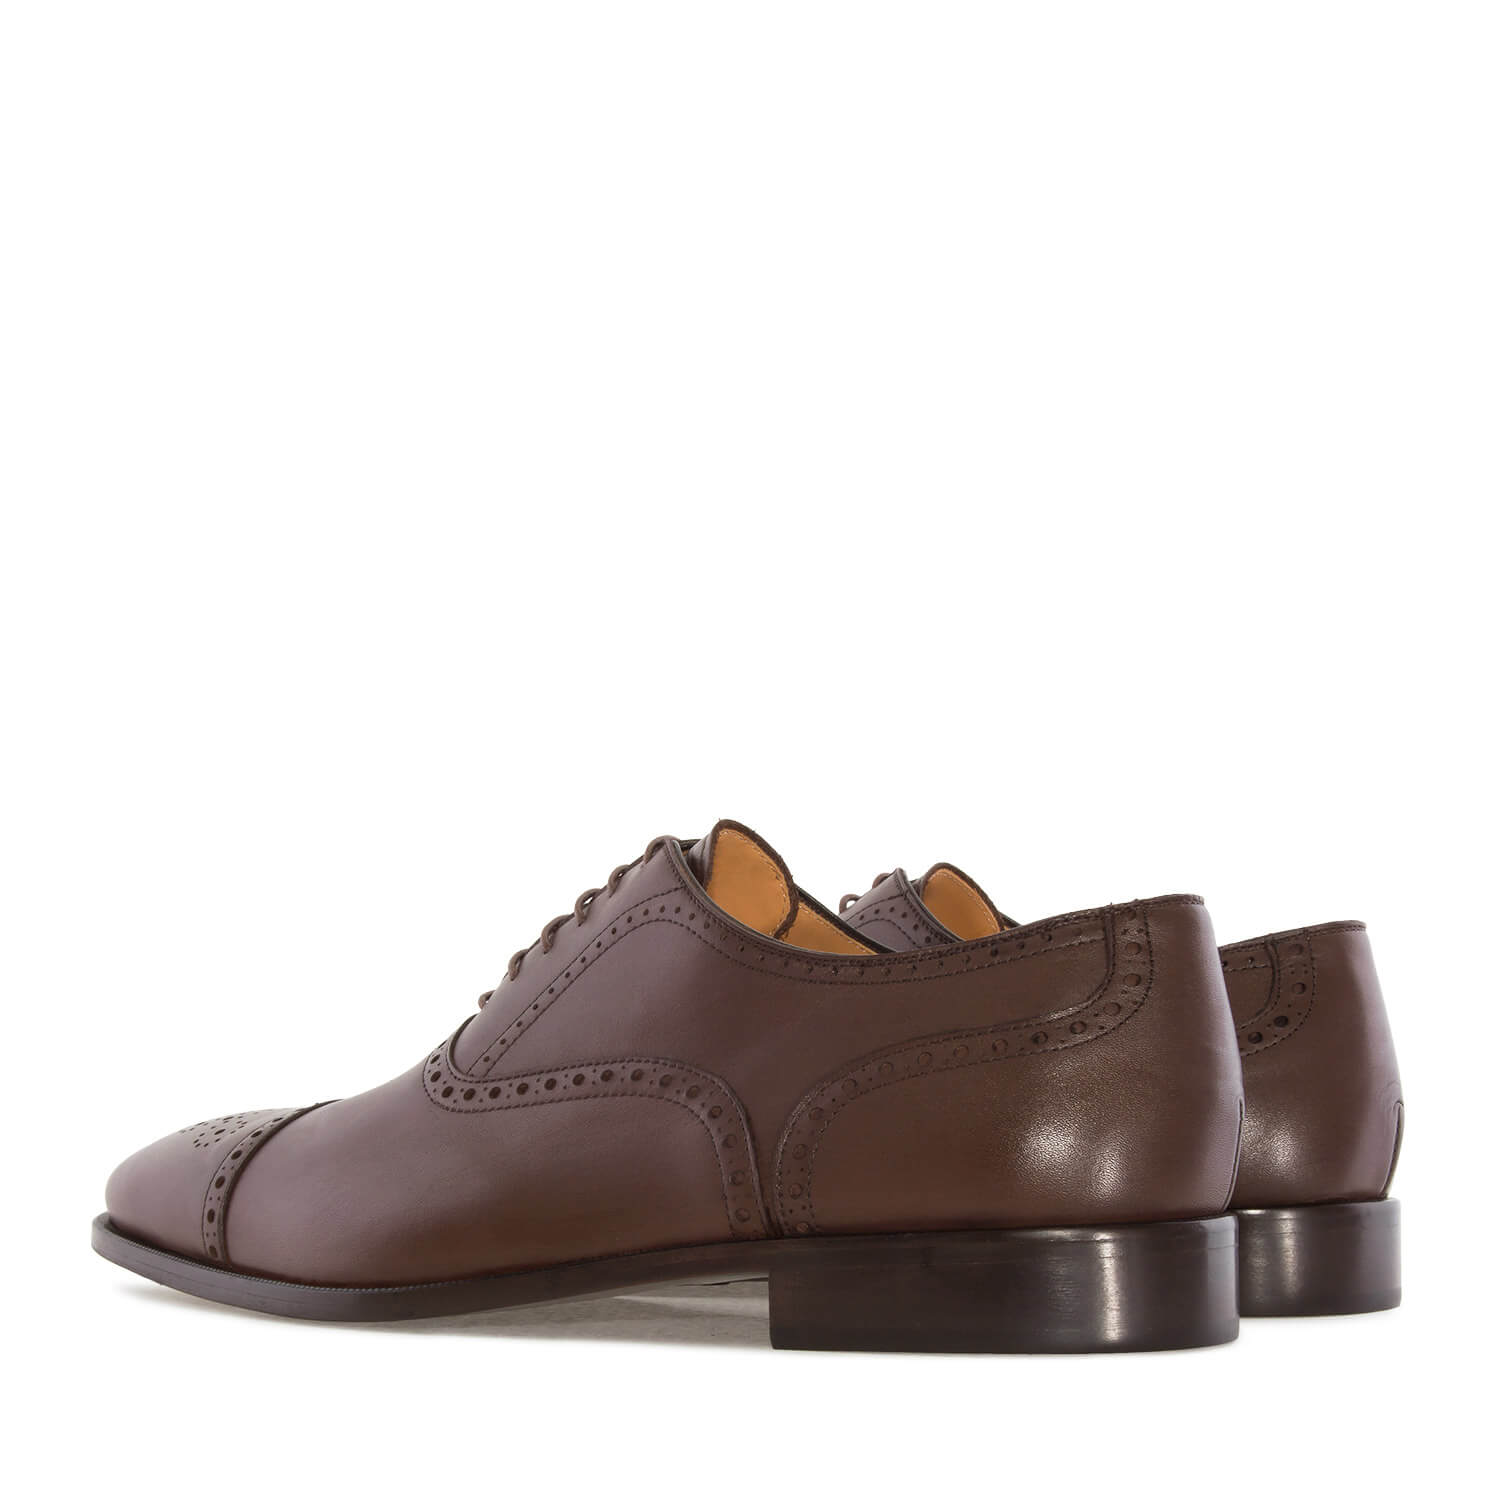 Elegante Schuhe im Oxfordstil aus braunem Leder 